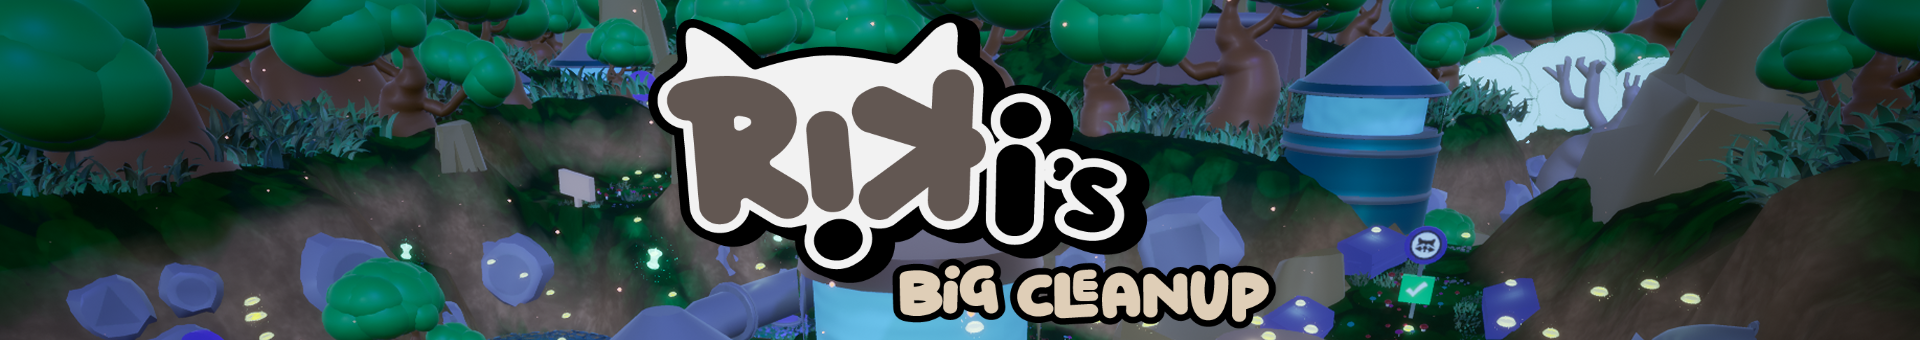 Riki’s Big Cleanup